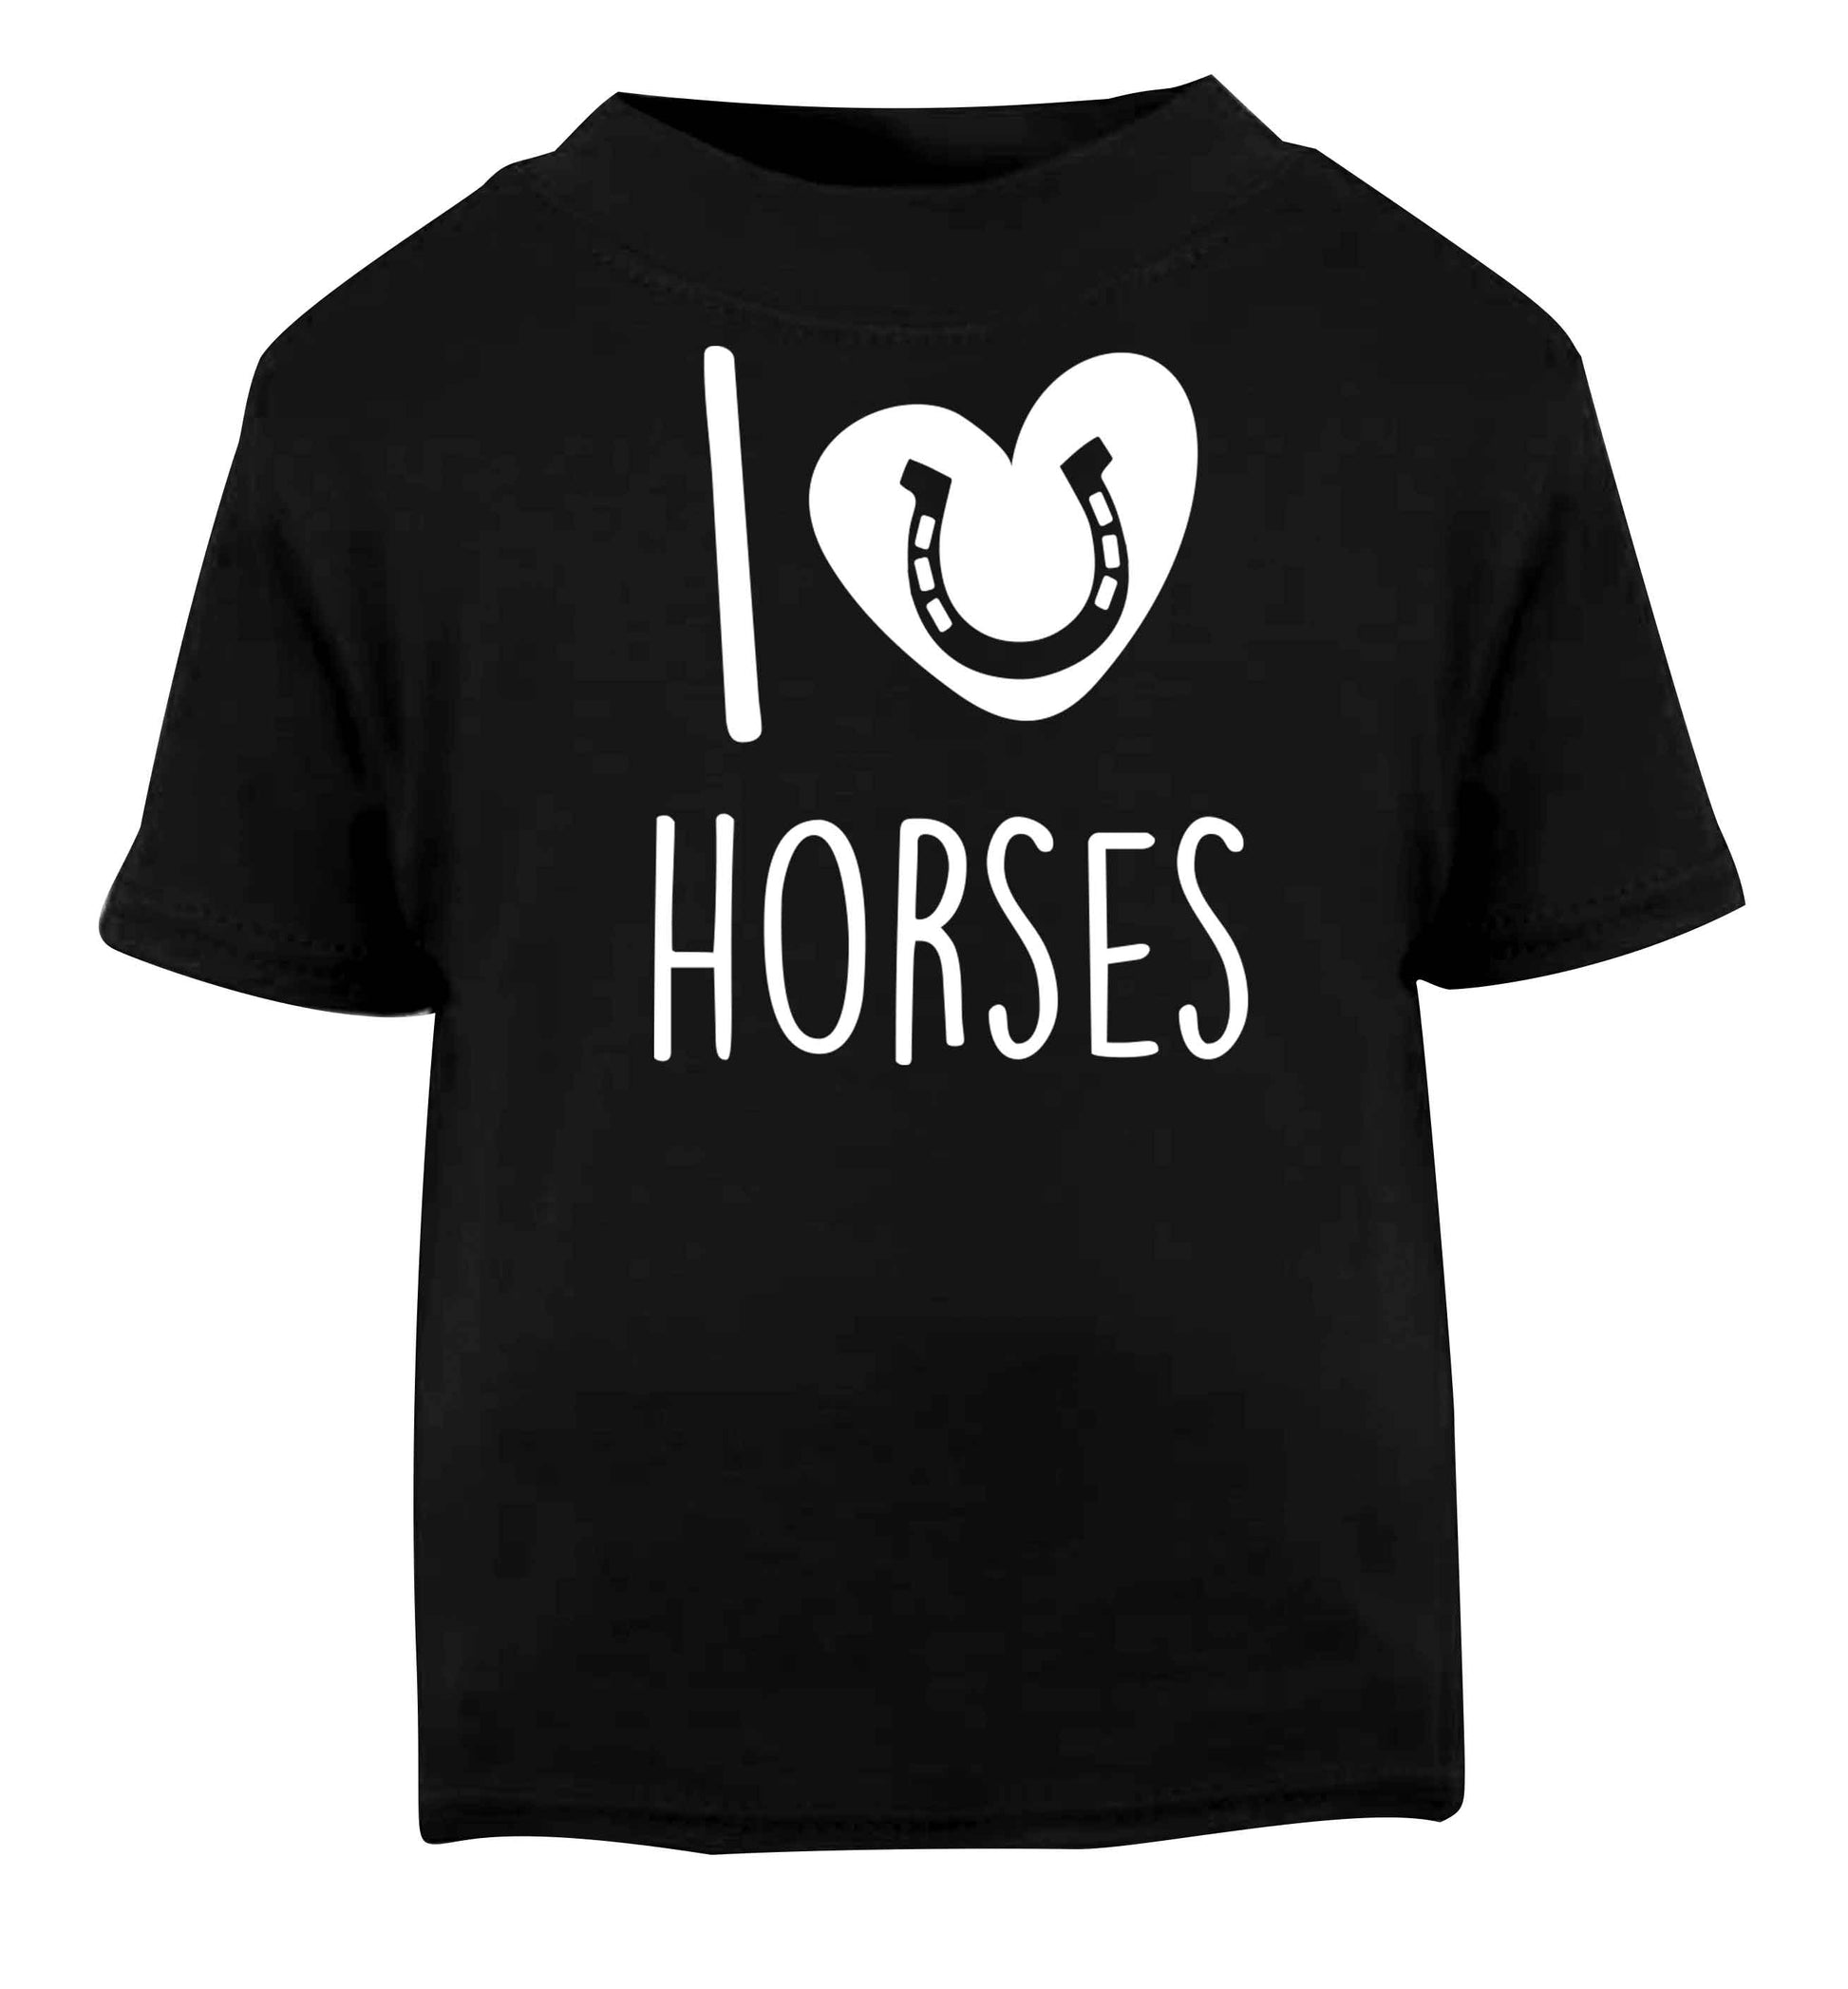 I love horses Black baby toddler Tshirt 2 years